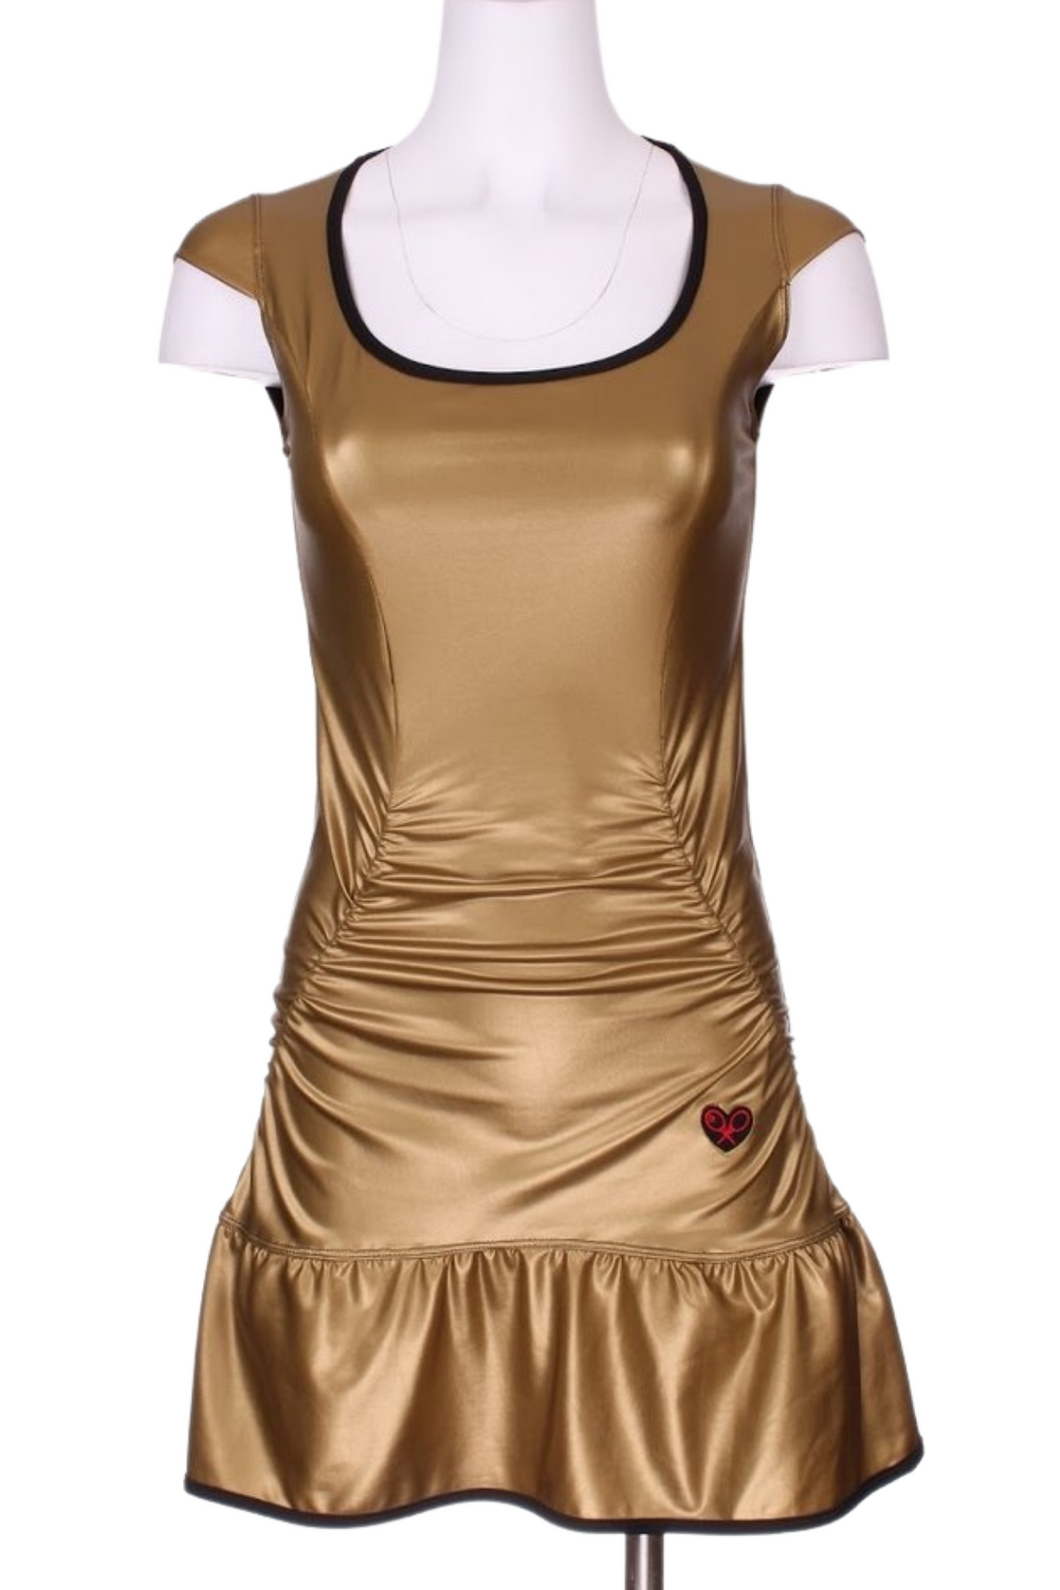 Gold Pleather Monroe Tennis Dress - I LOVE MY DOUBLES PARTNER!!!